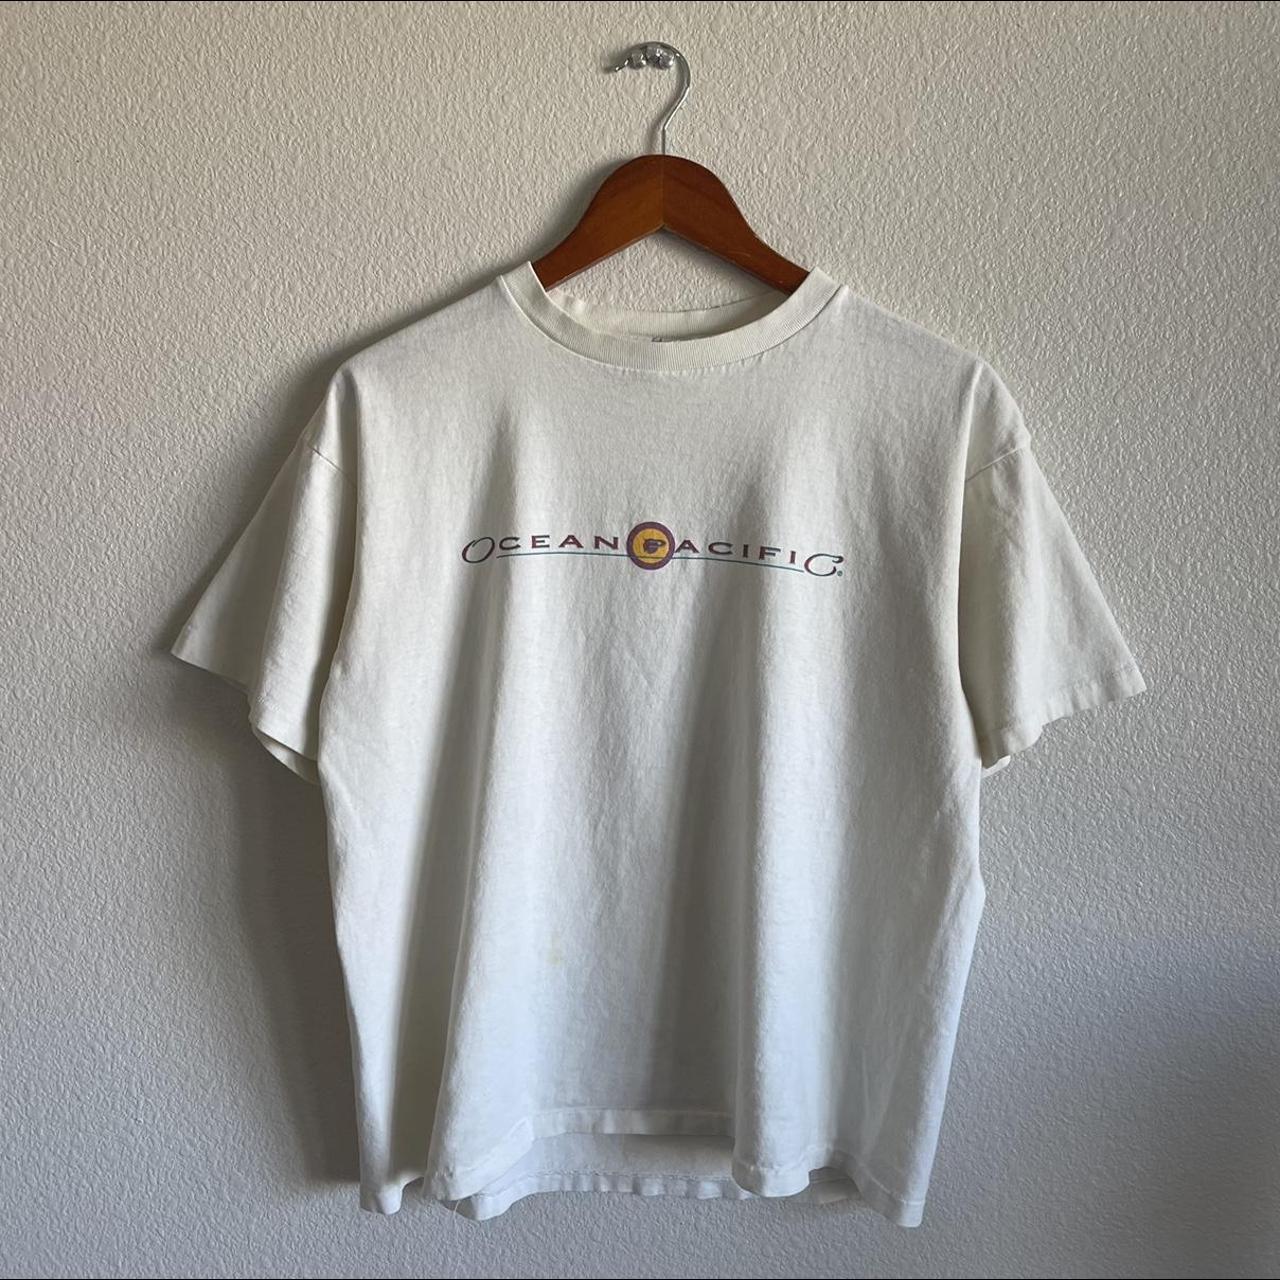 Ocean Pacific Men's White T-shirt (2)